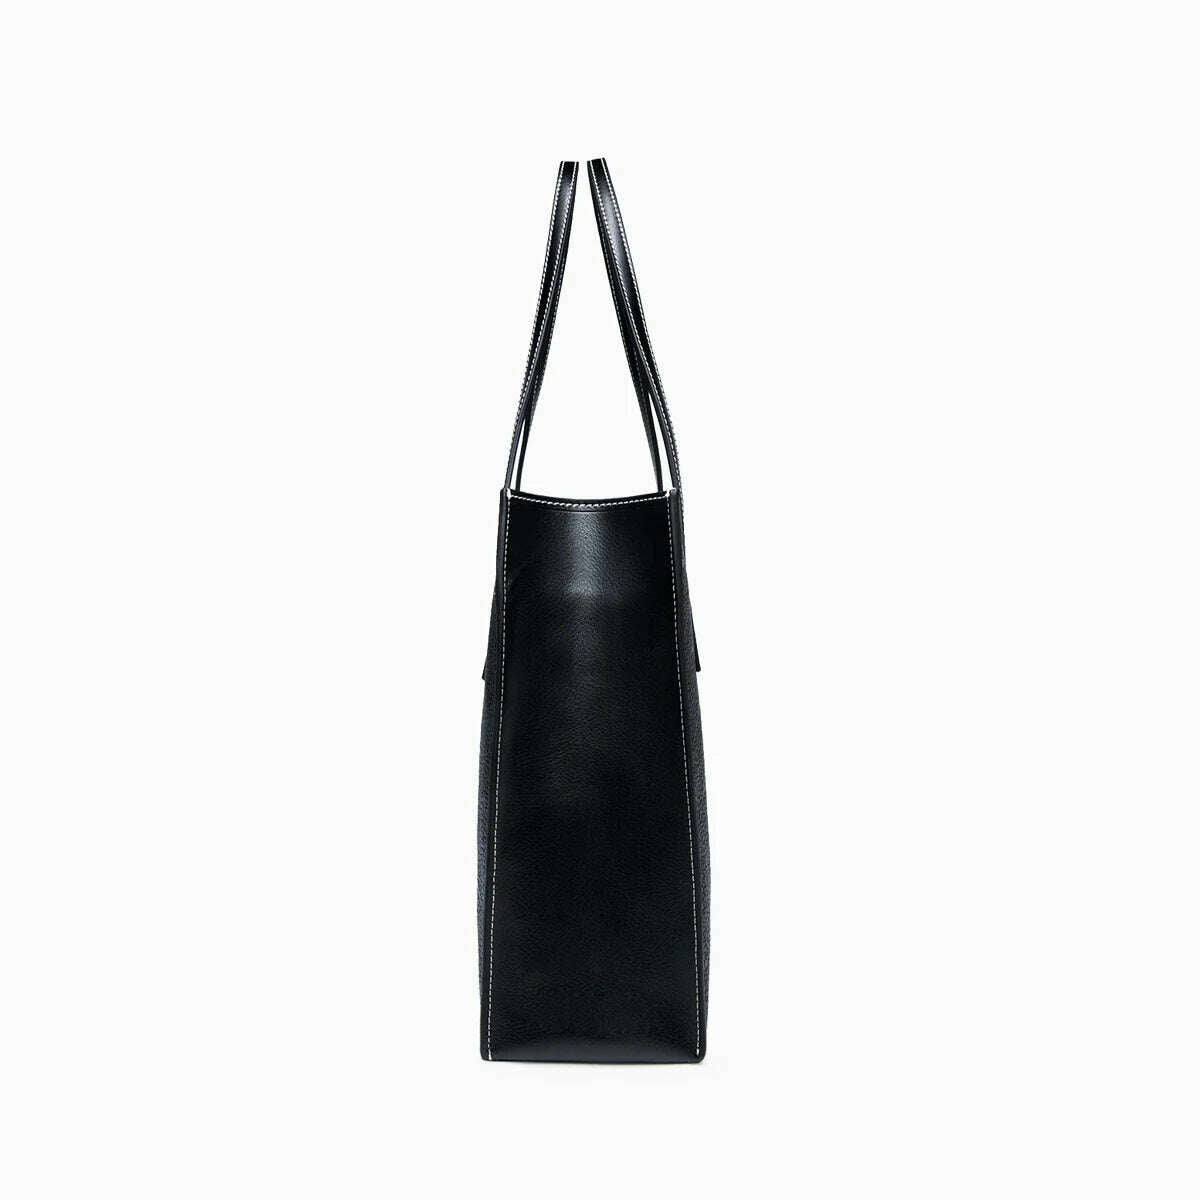 KIMLUD, ZOOLER New Full 100% Genuine Leather Women Shoulder Bag First Layer Skin Tote Original Large Handbag Travel Big Female Business#, KIMLUD Women's Clothes